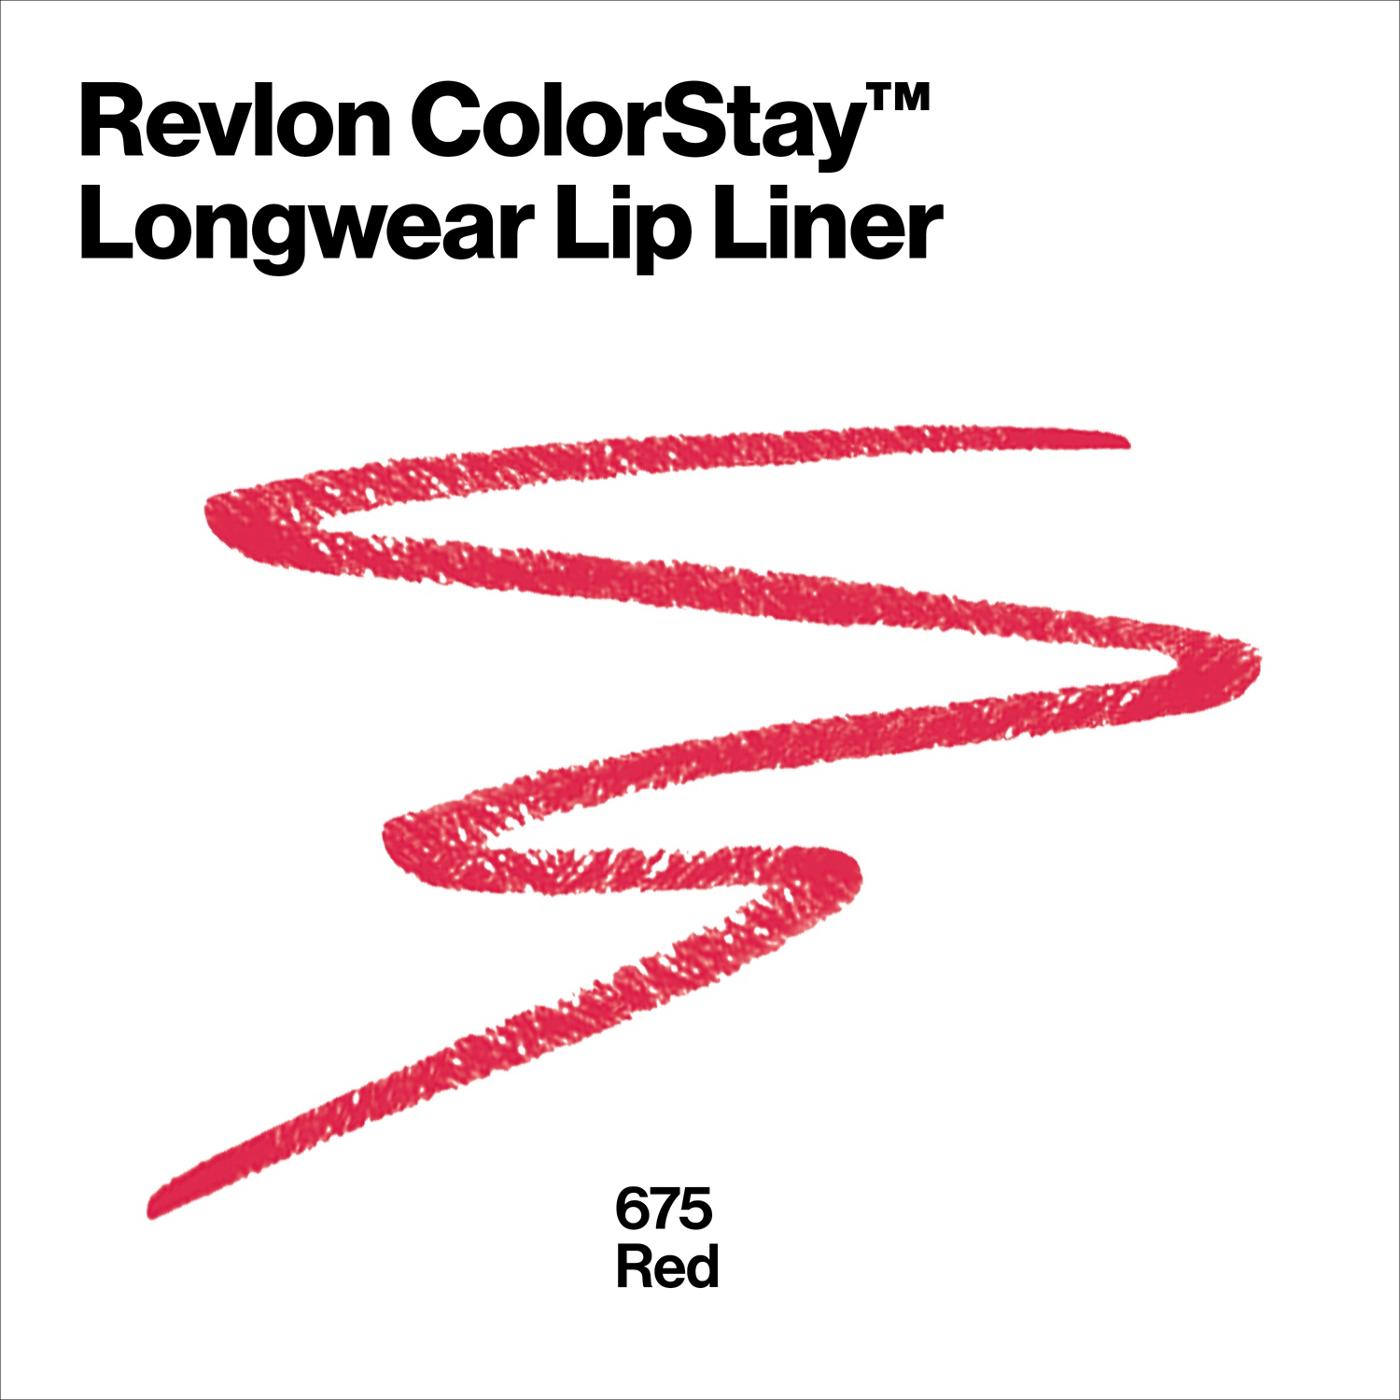 Revlon ColorStay Lipliner,   Red; image 9 of 9